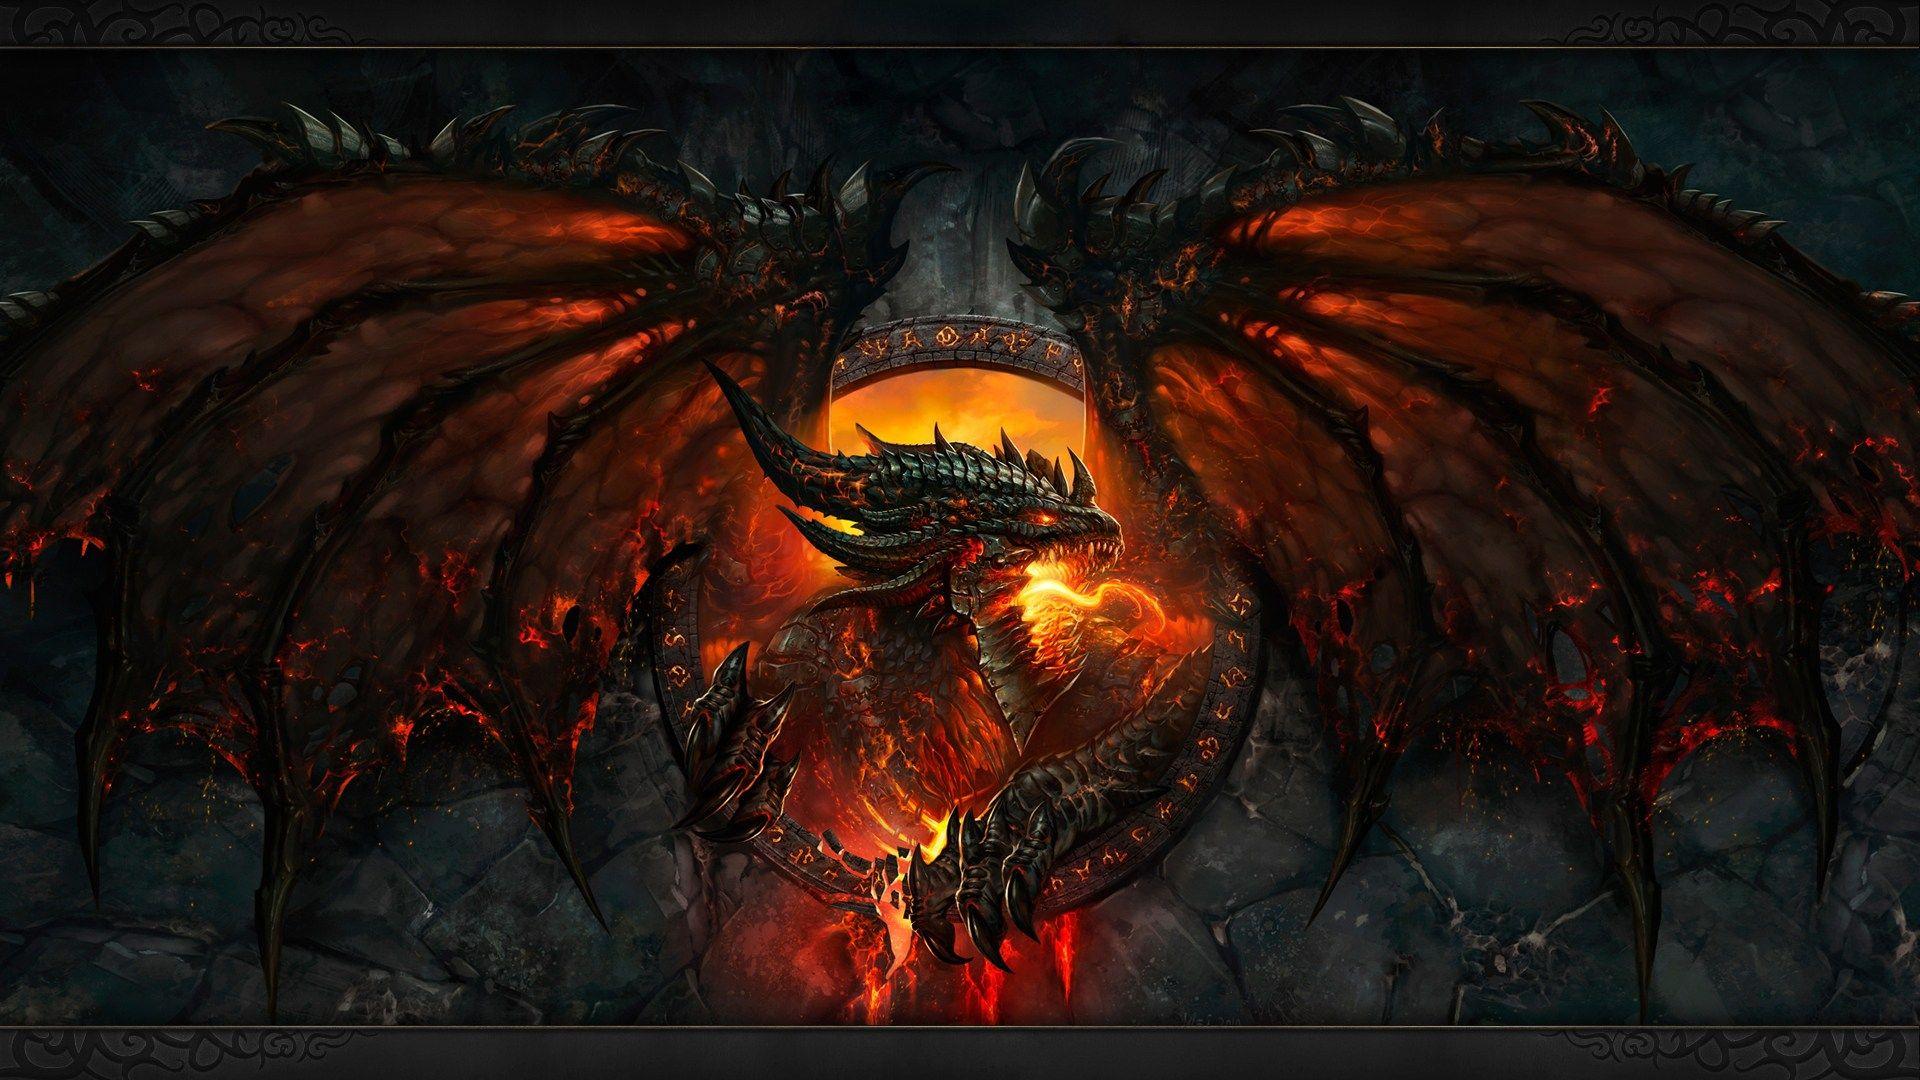 HD Dragon Wallpaper, Image, Background, Desktop